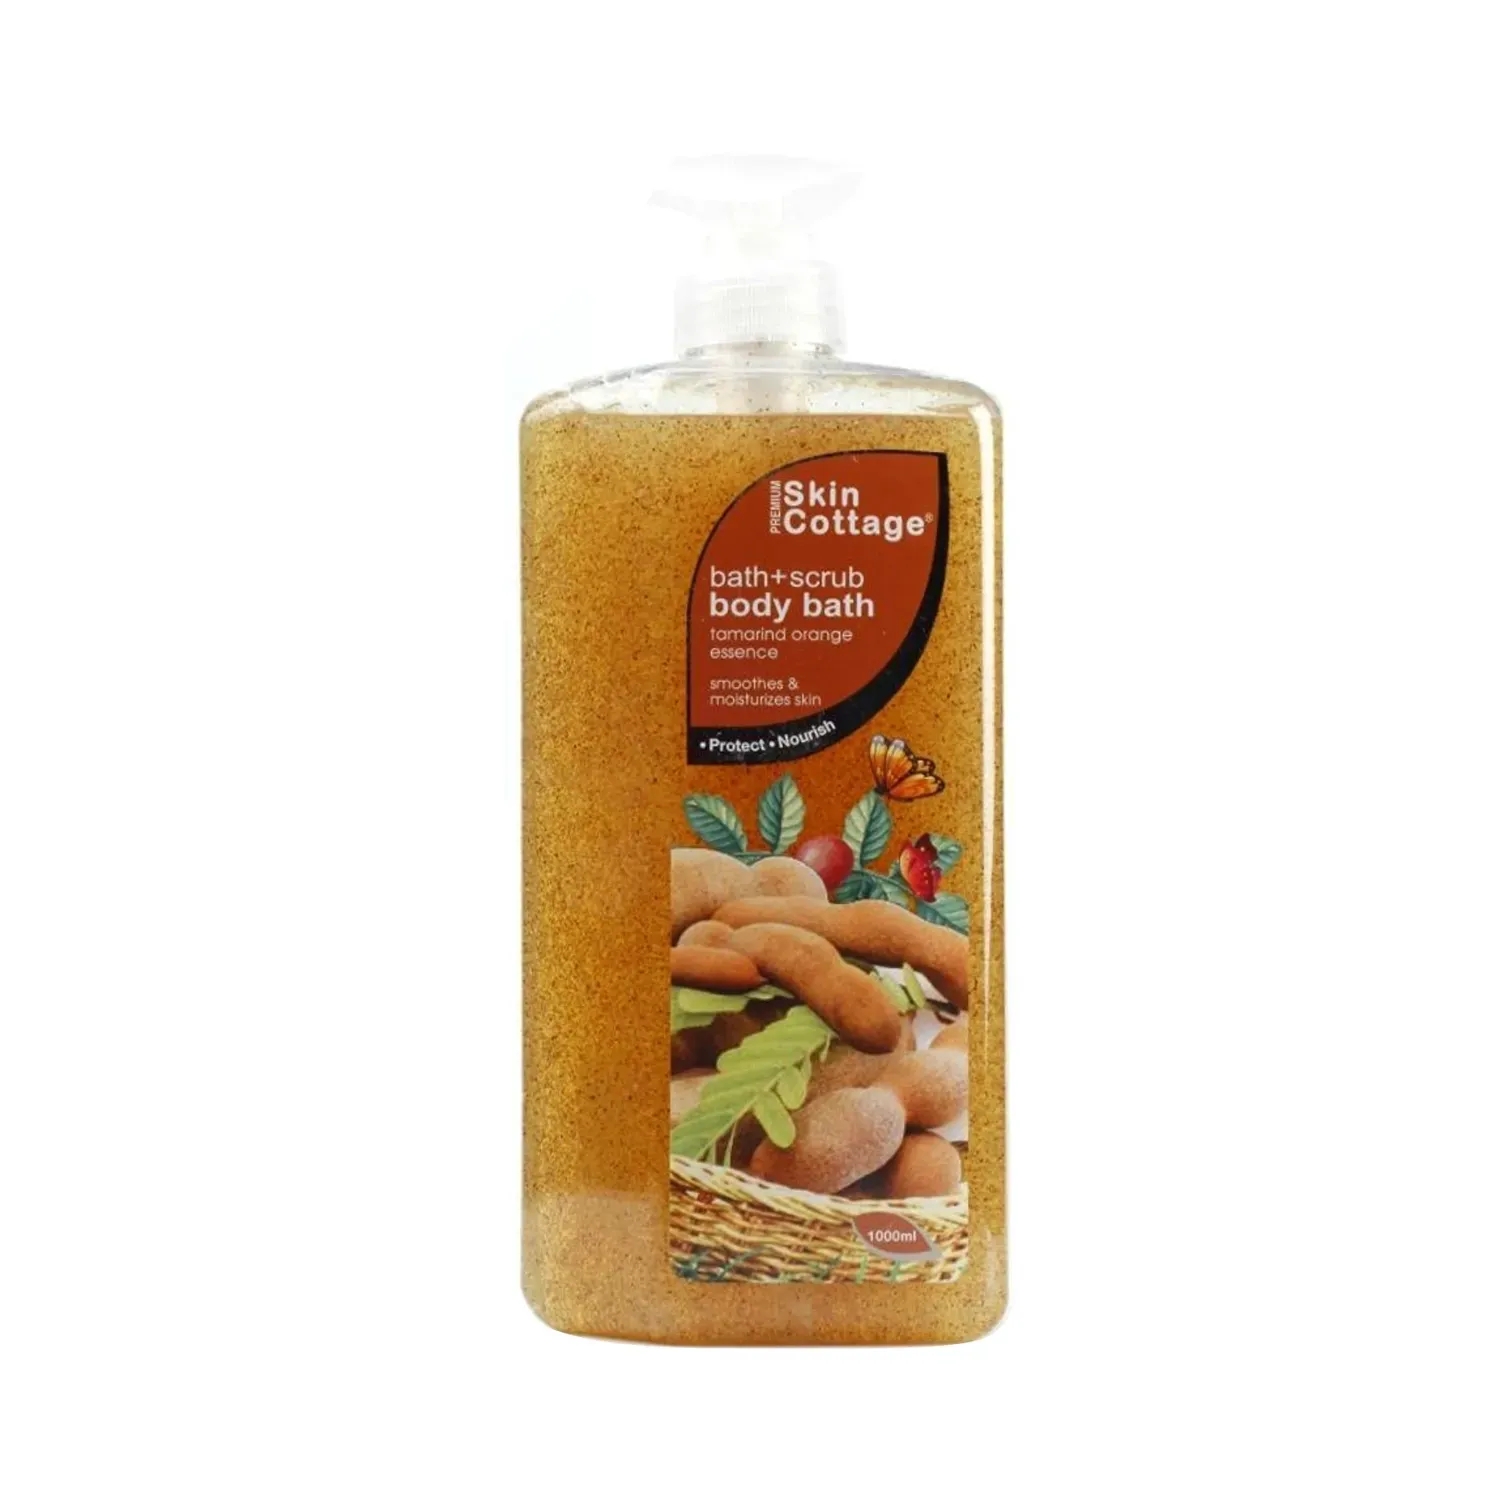 SKIN COTTAGE Tamrind & Orange Essence Body Bath + Scrub (1000ml)